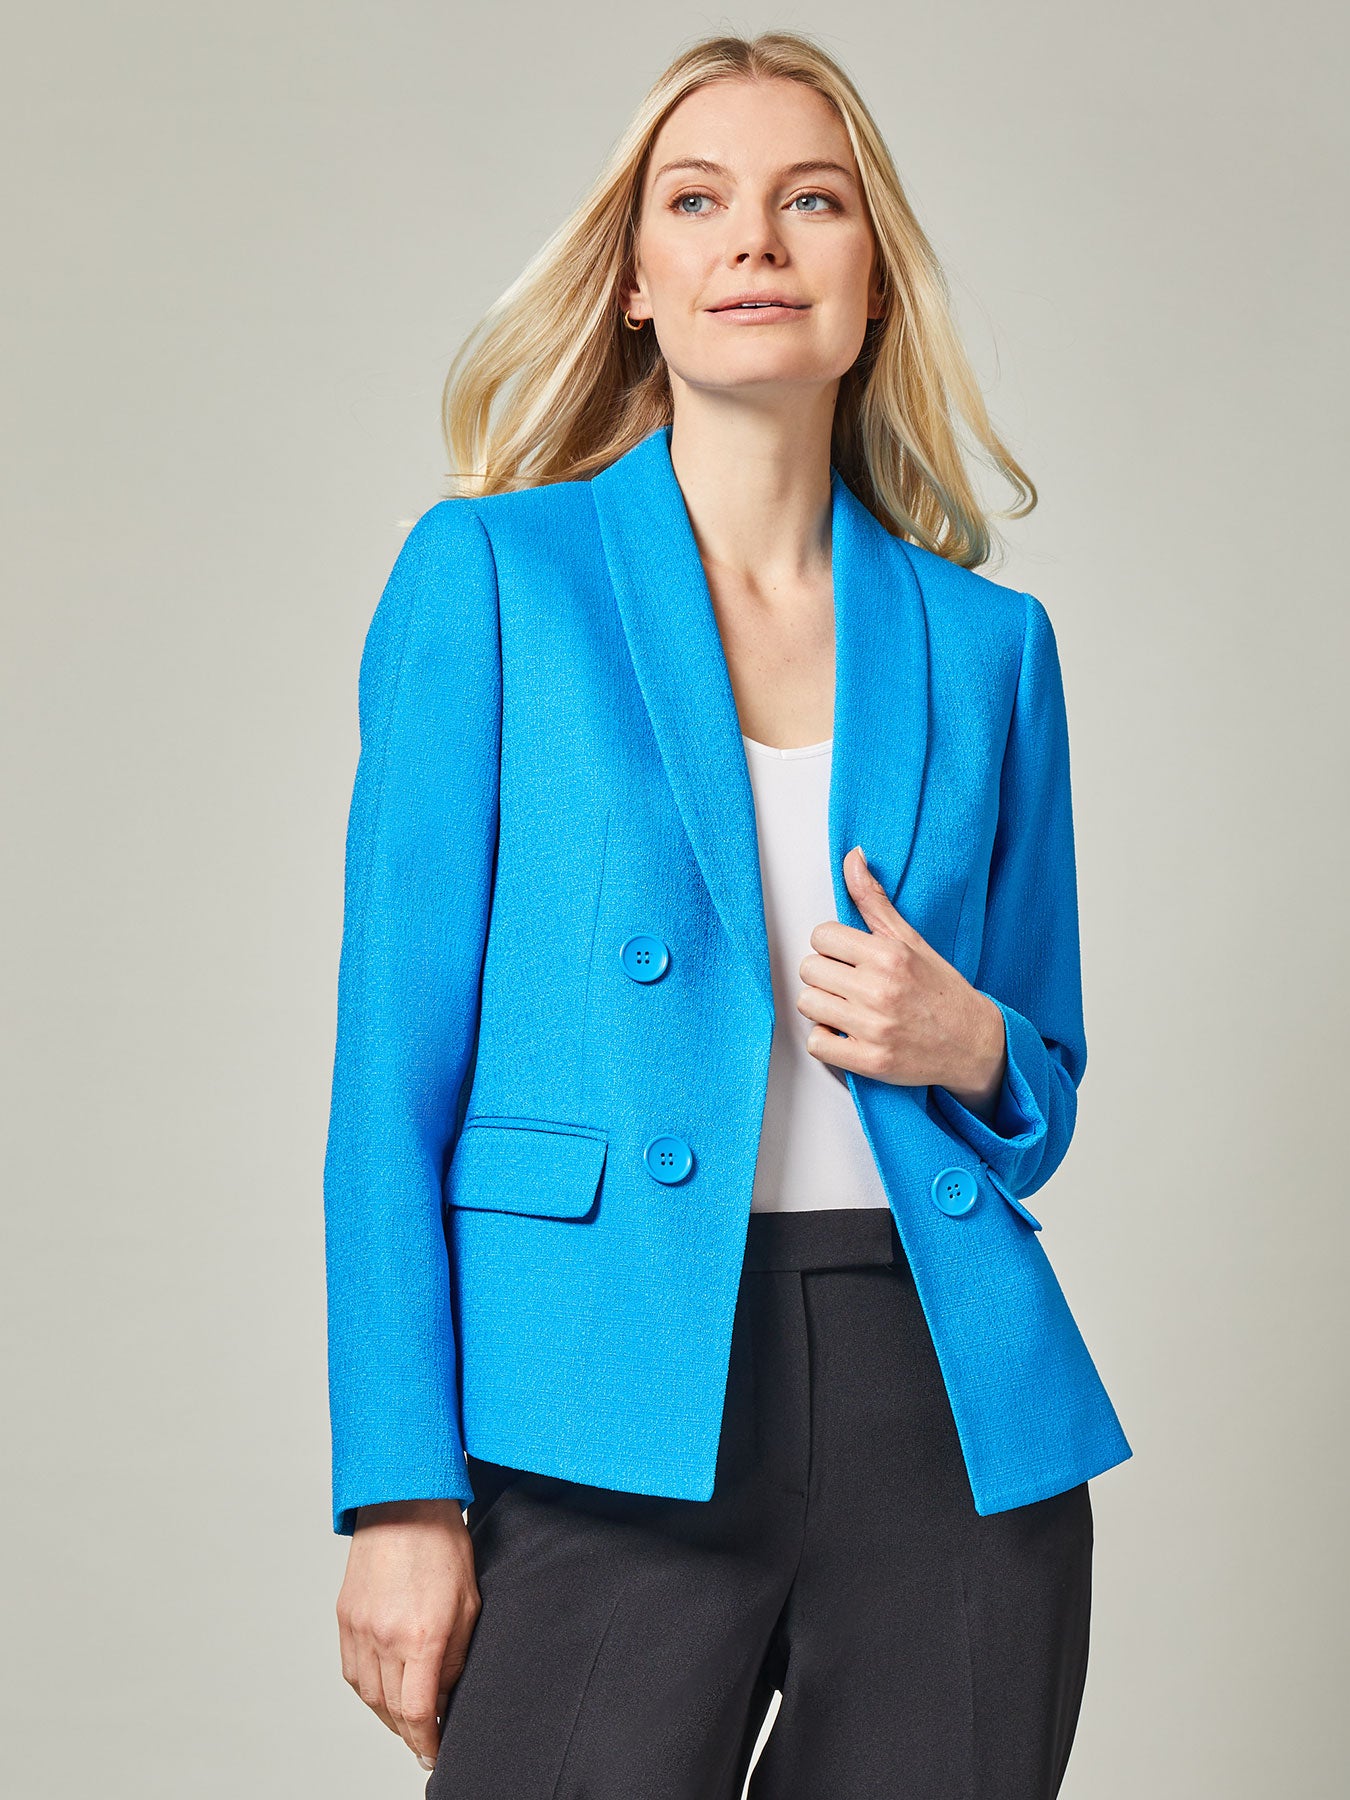 Women's Blazers - Business Casual Jacket